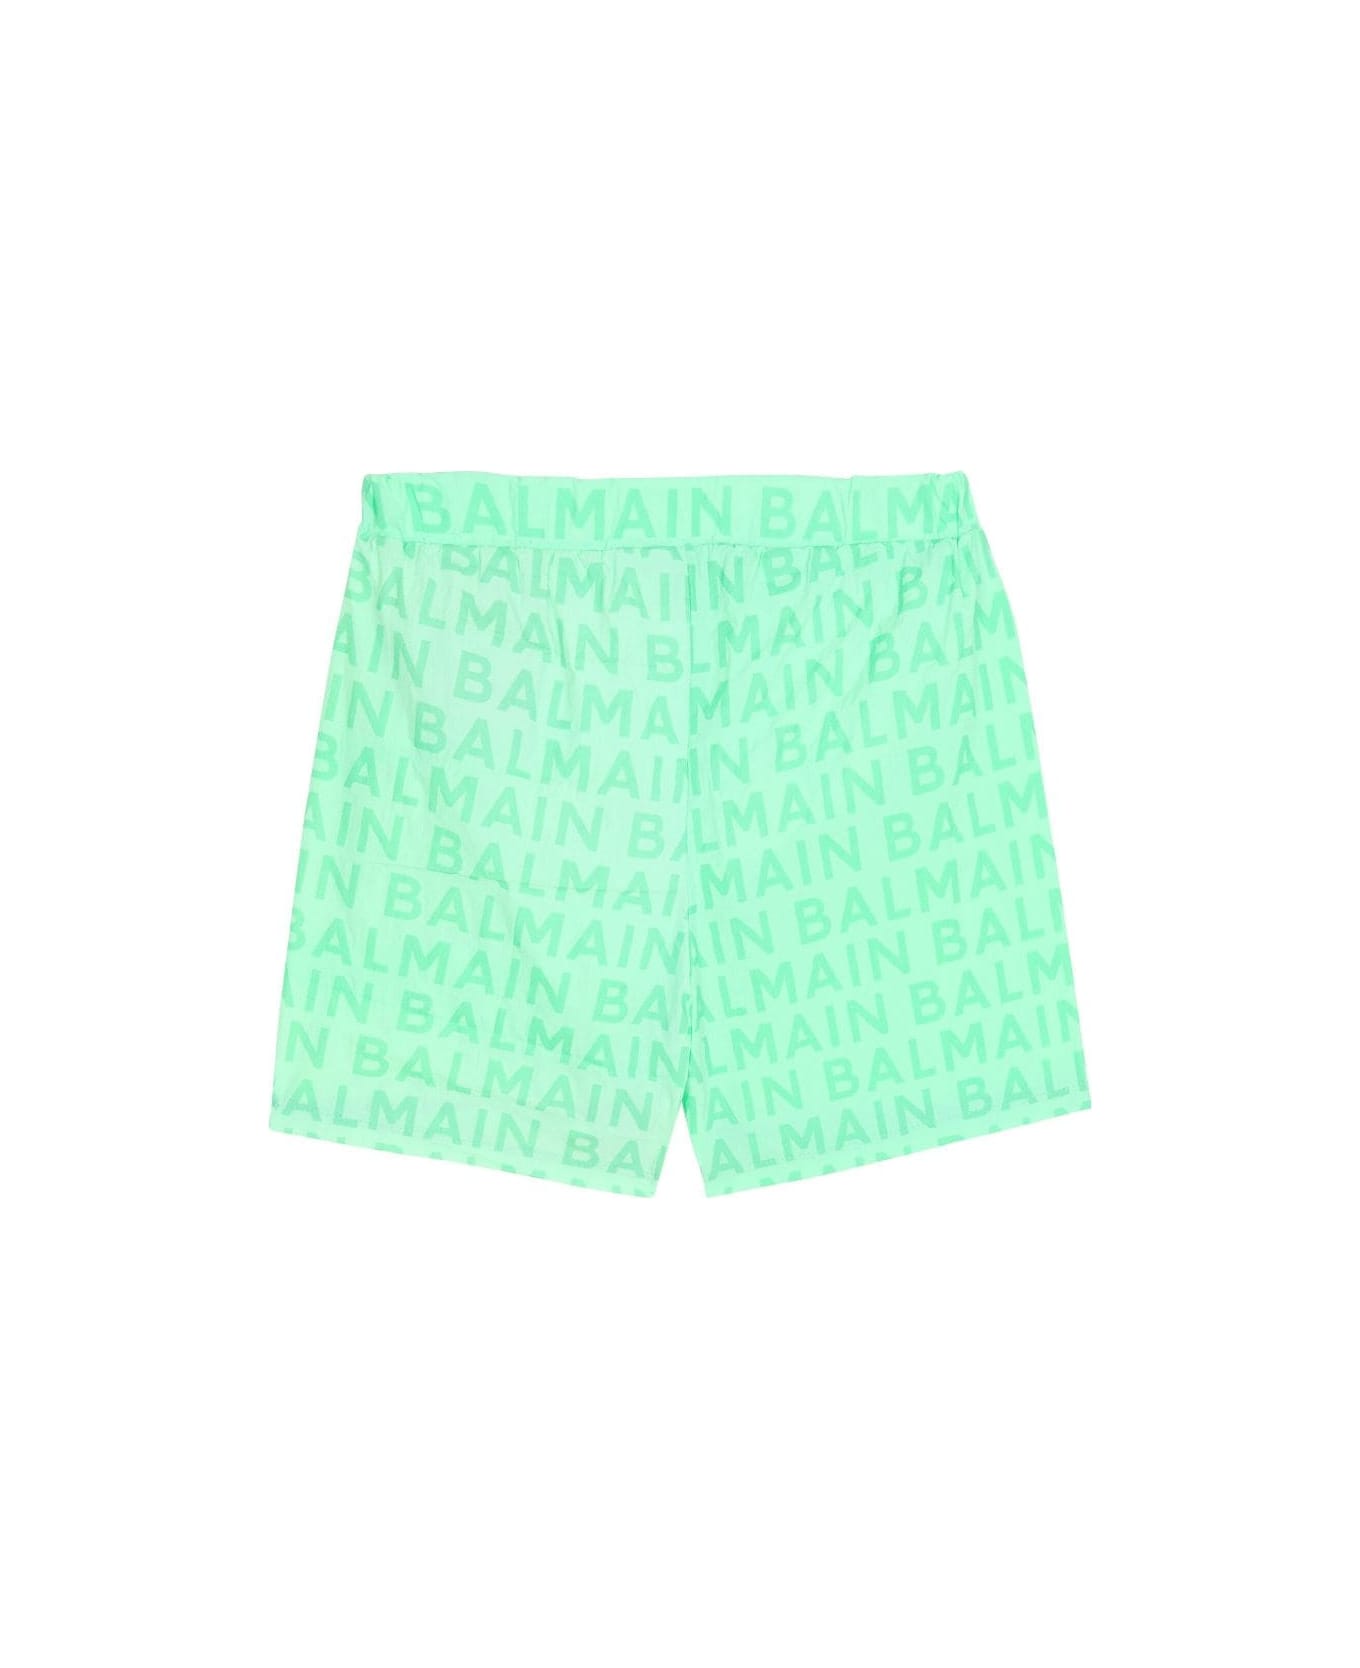 Balmain Printed Swimsuit - Green